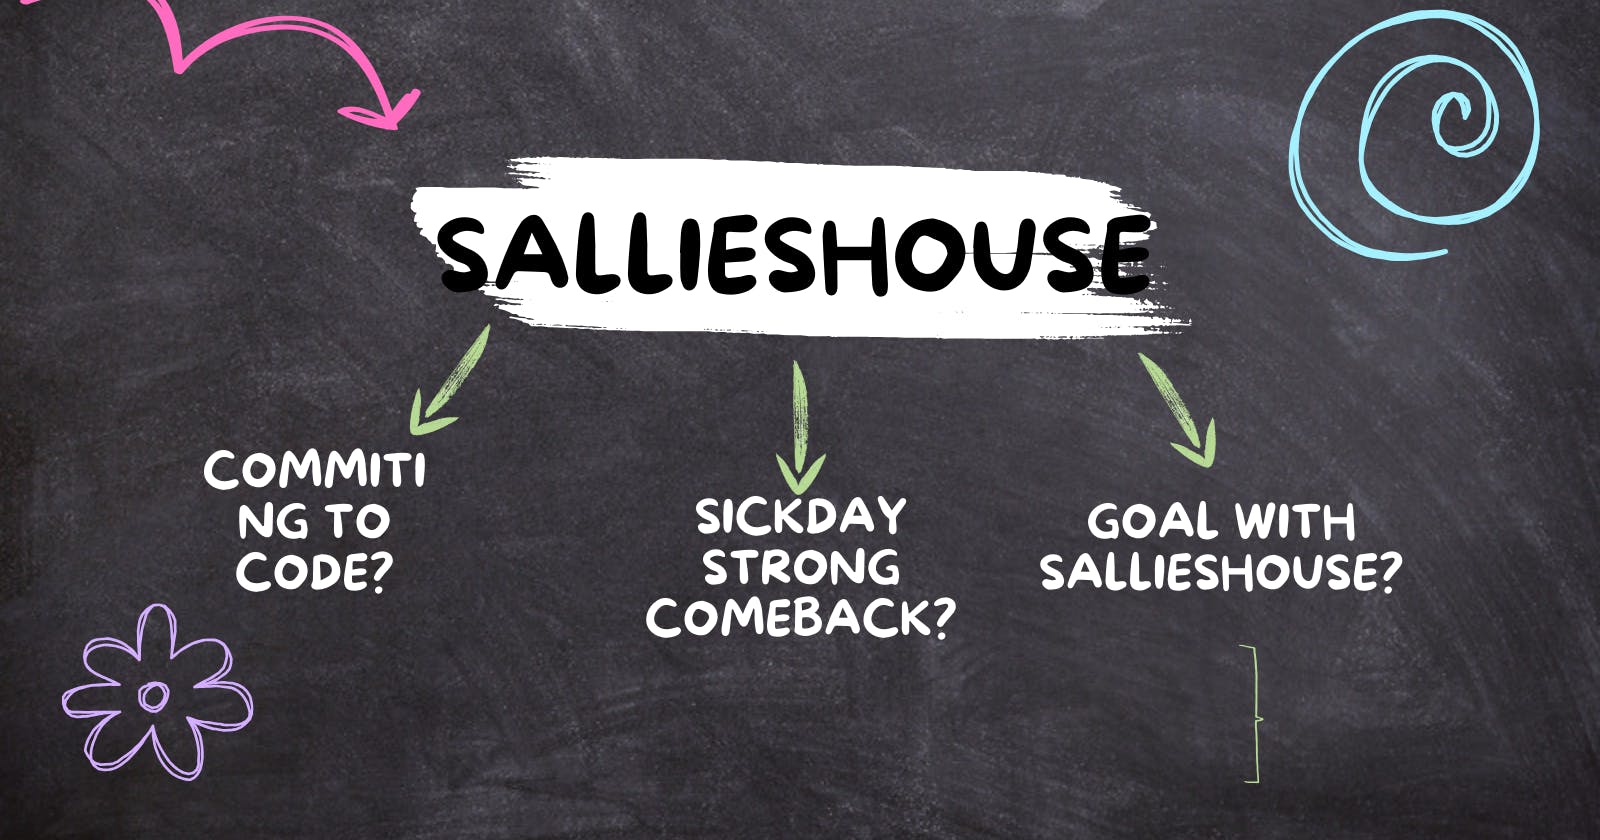 Welcome to Sallieshouse: My Coding Odyssey